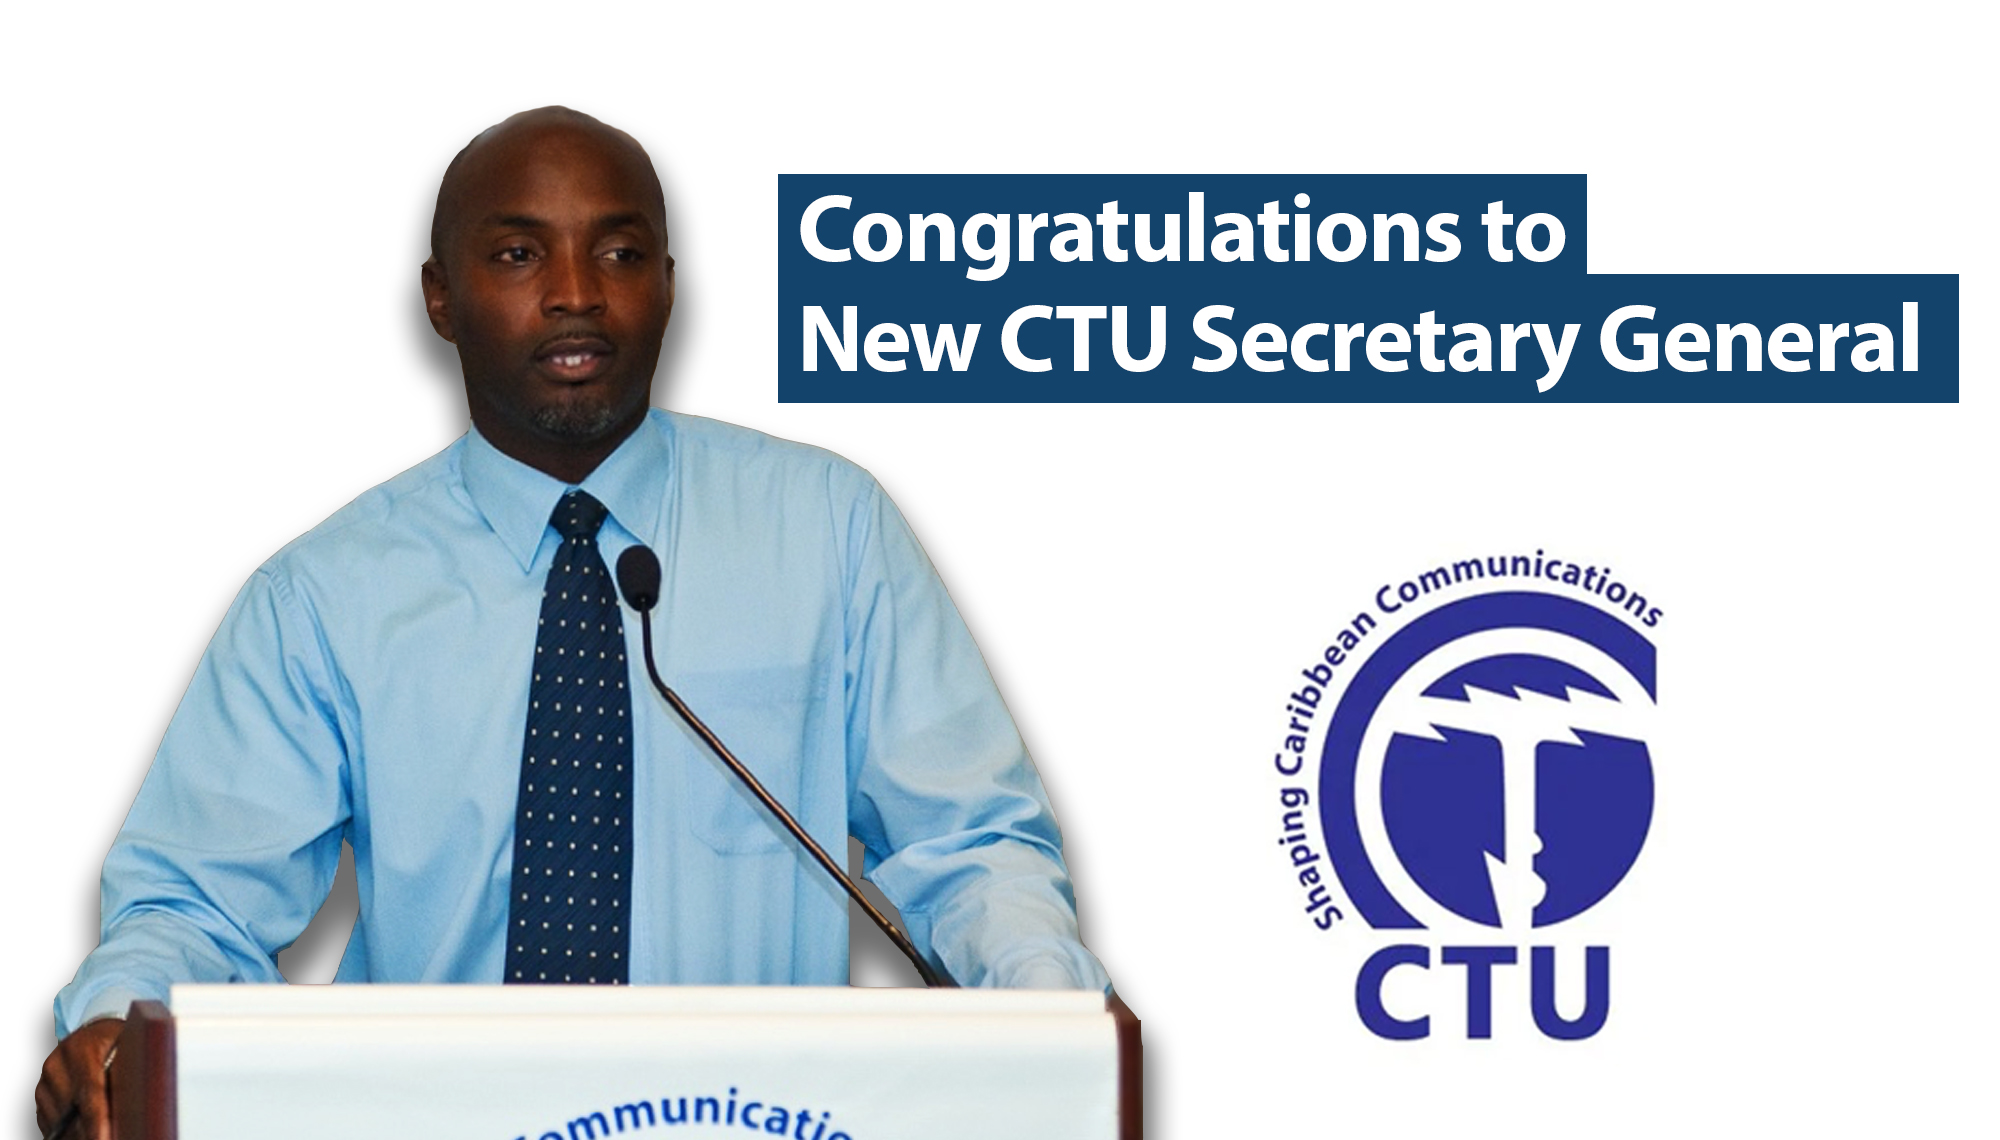 Congratulations to New CTU Secretary General